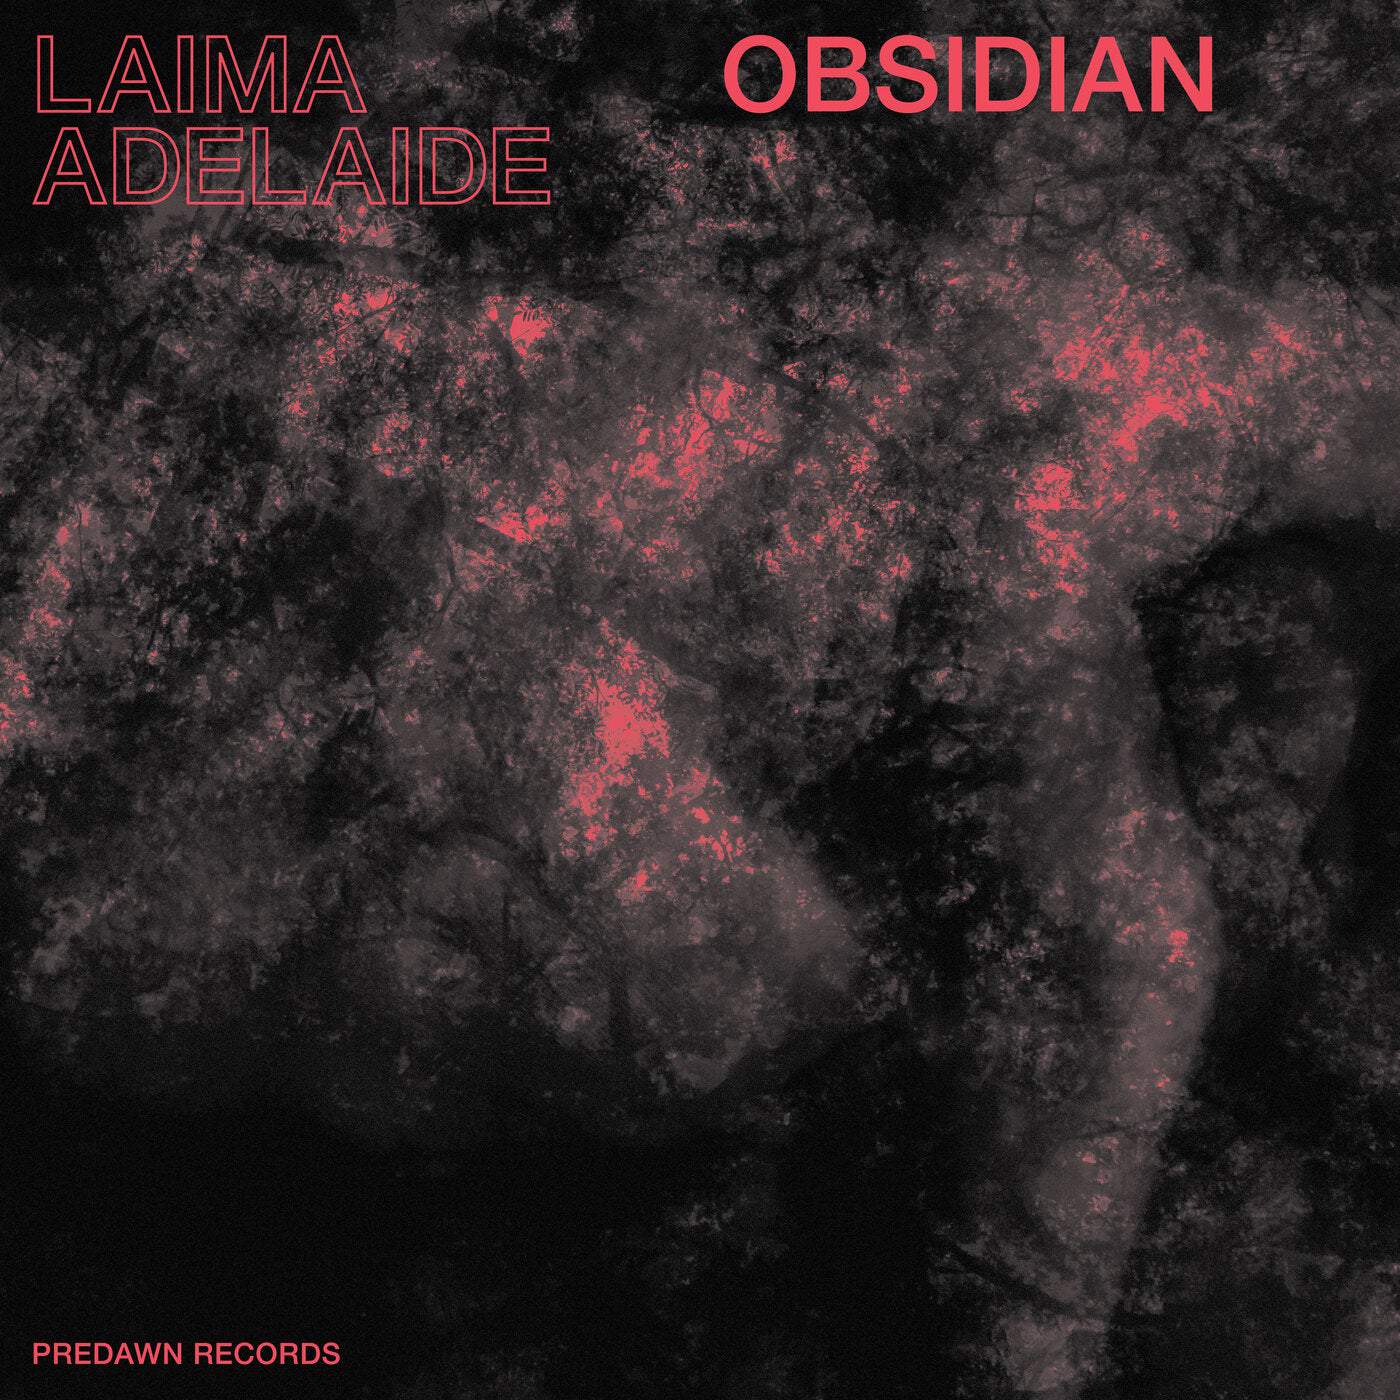 Download Laima Adelaide - Obsidian on Electrobuzz